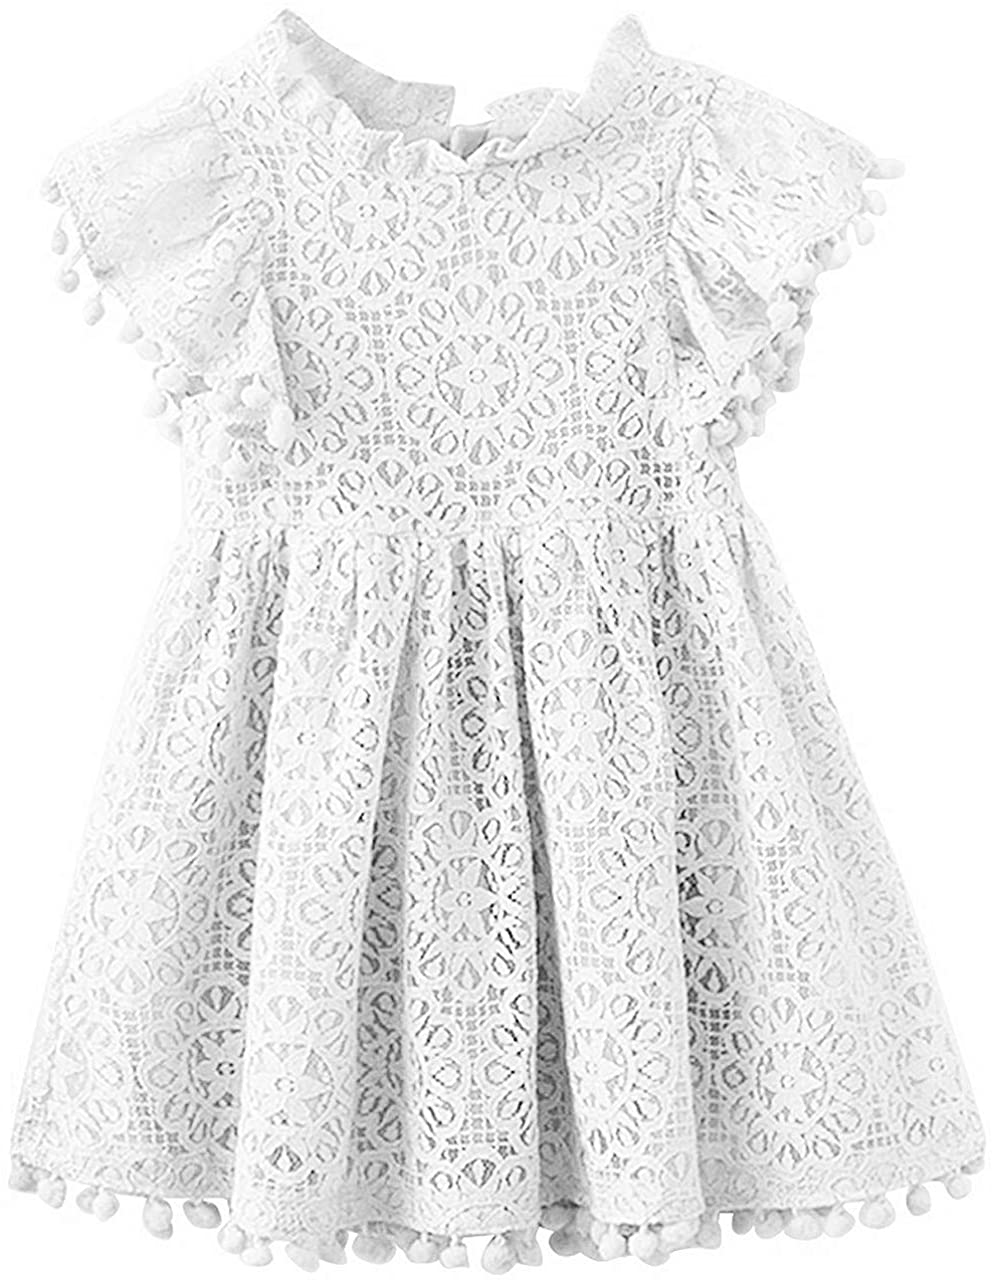 Cute Dress for Kids Vintage Lace Boho Party Princess Gown Flower Girl Dresses